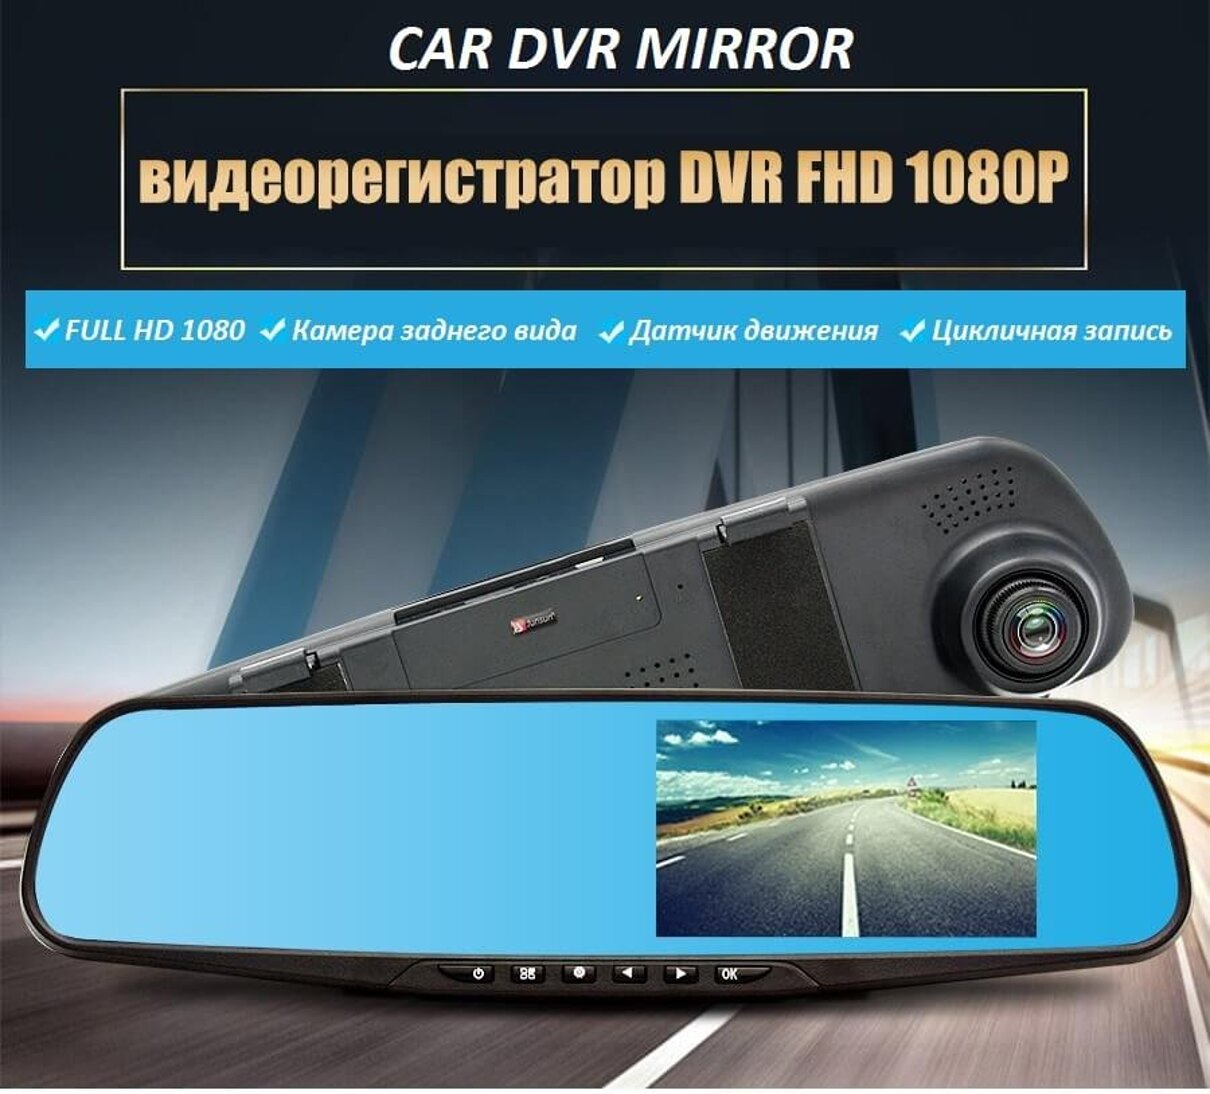 Видеорегистратор с радар детектором зеркало рейтинг. Видеорегистратор зеркало Миррор. Видеорегистратор car DVRS Mirror. Car DVR Mirror видеорегистратор.